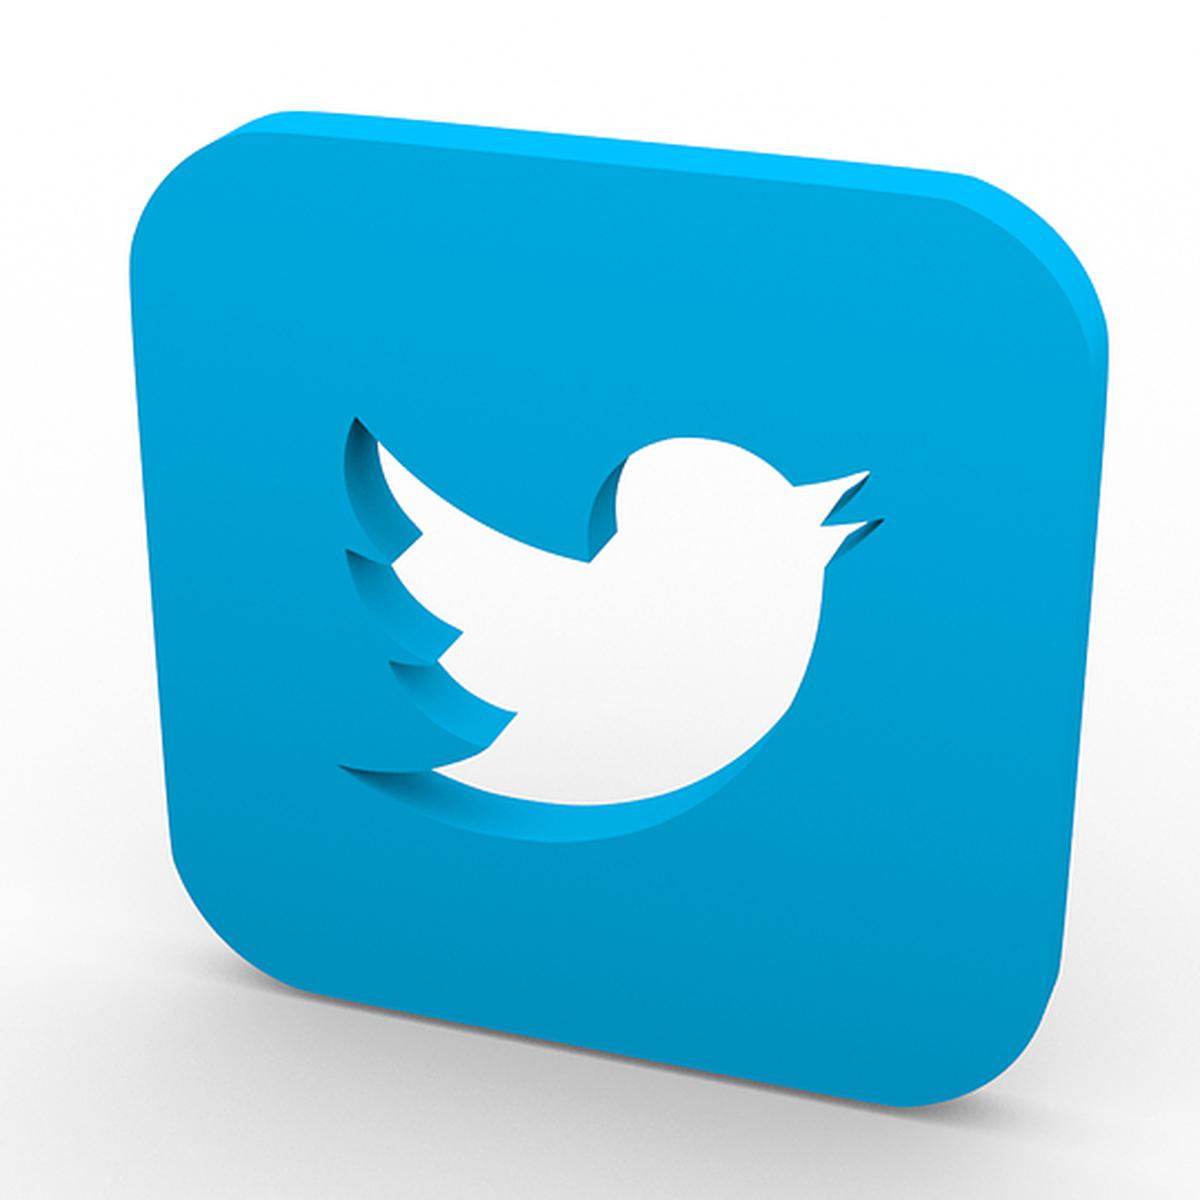 Twitter-Onlyfans | Twitter por poco llegó a abrir su propio 